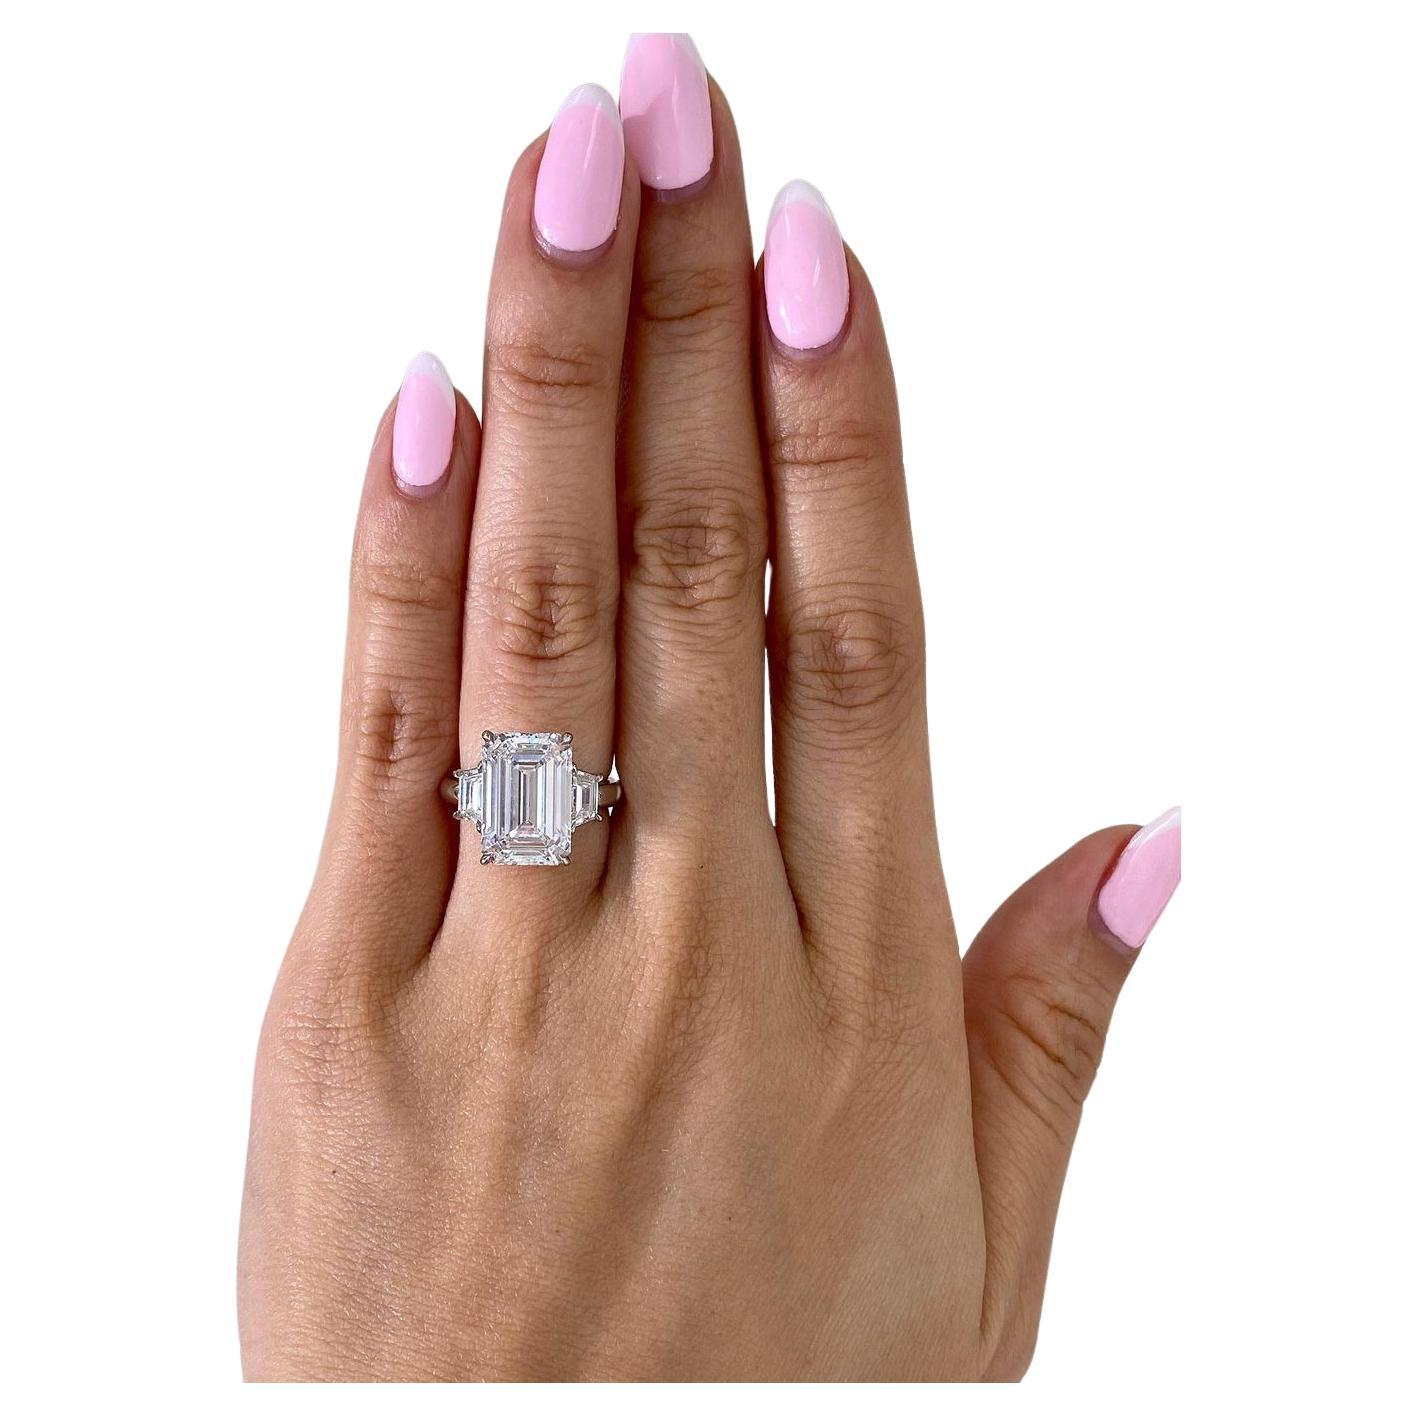 GIA Certified 6.18 Carat Emerald Cut Diamond Ring